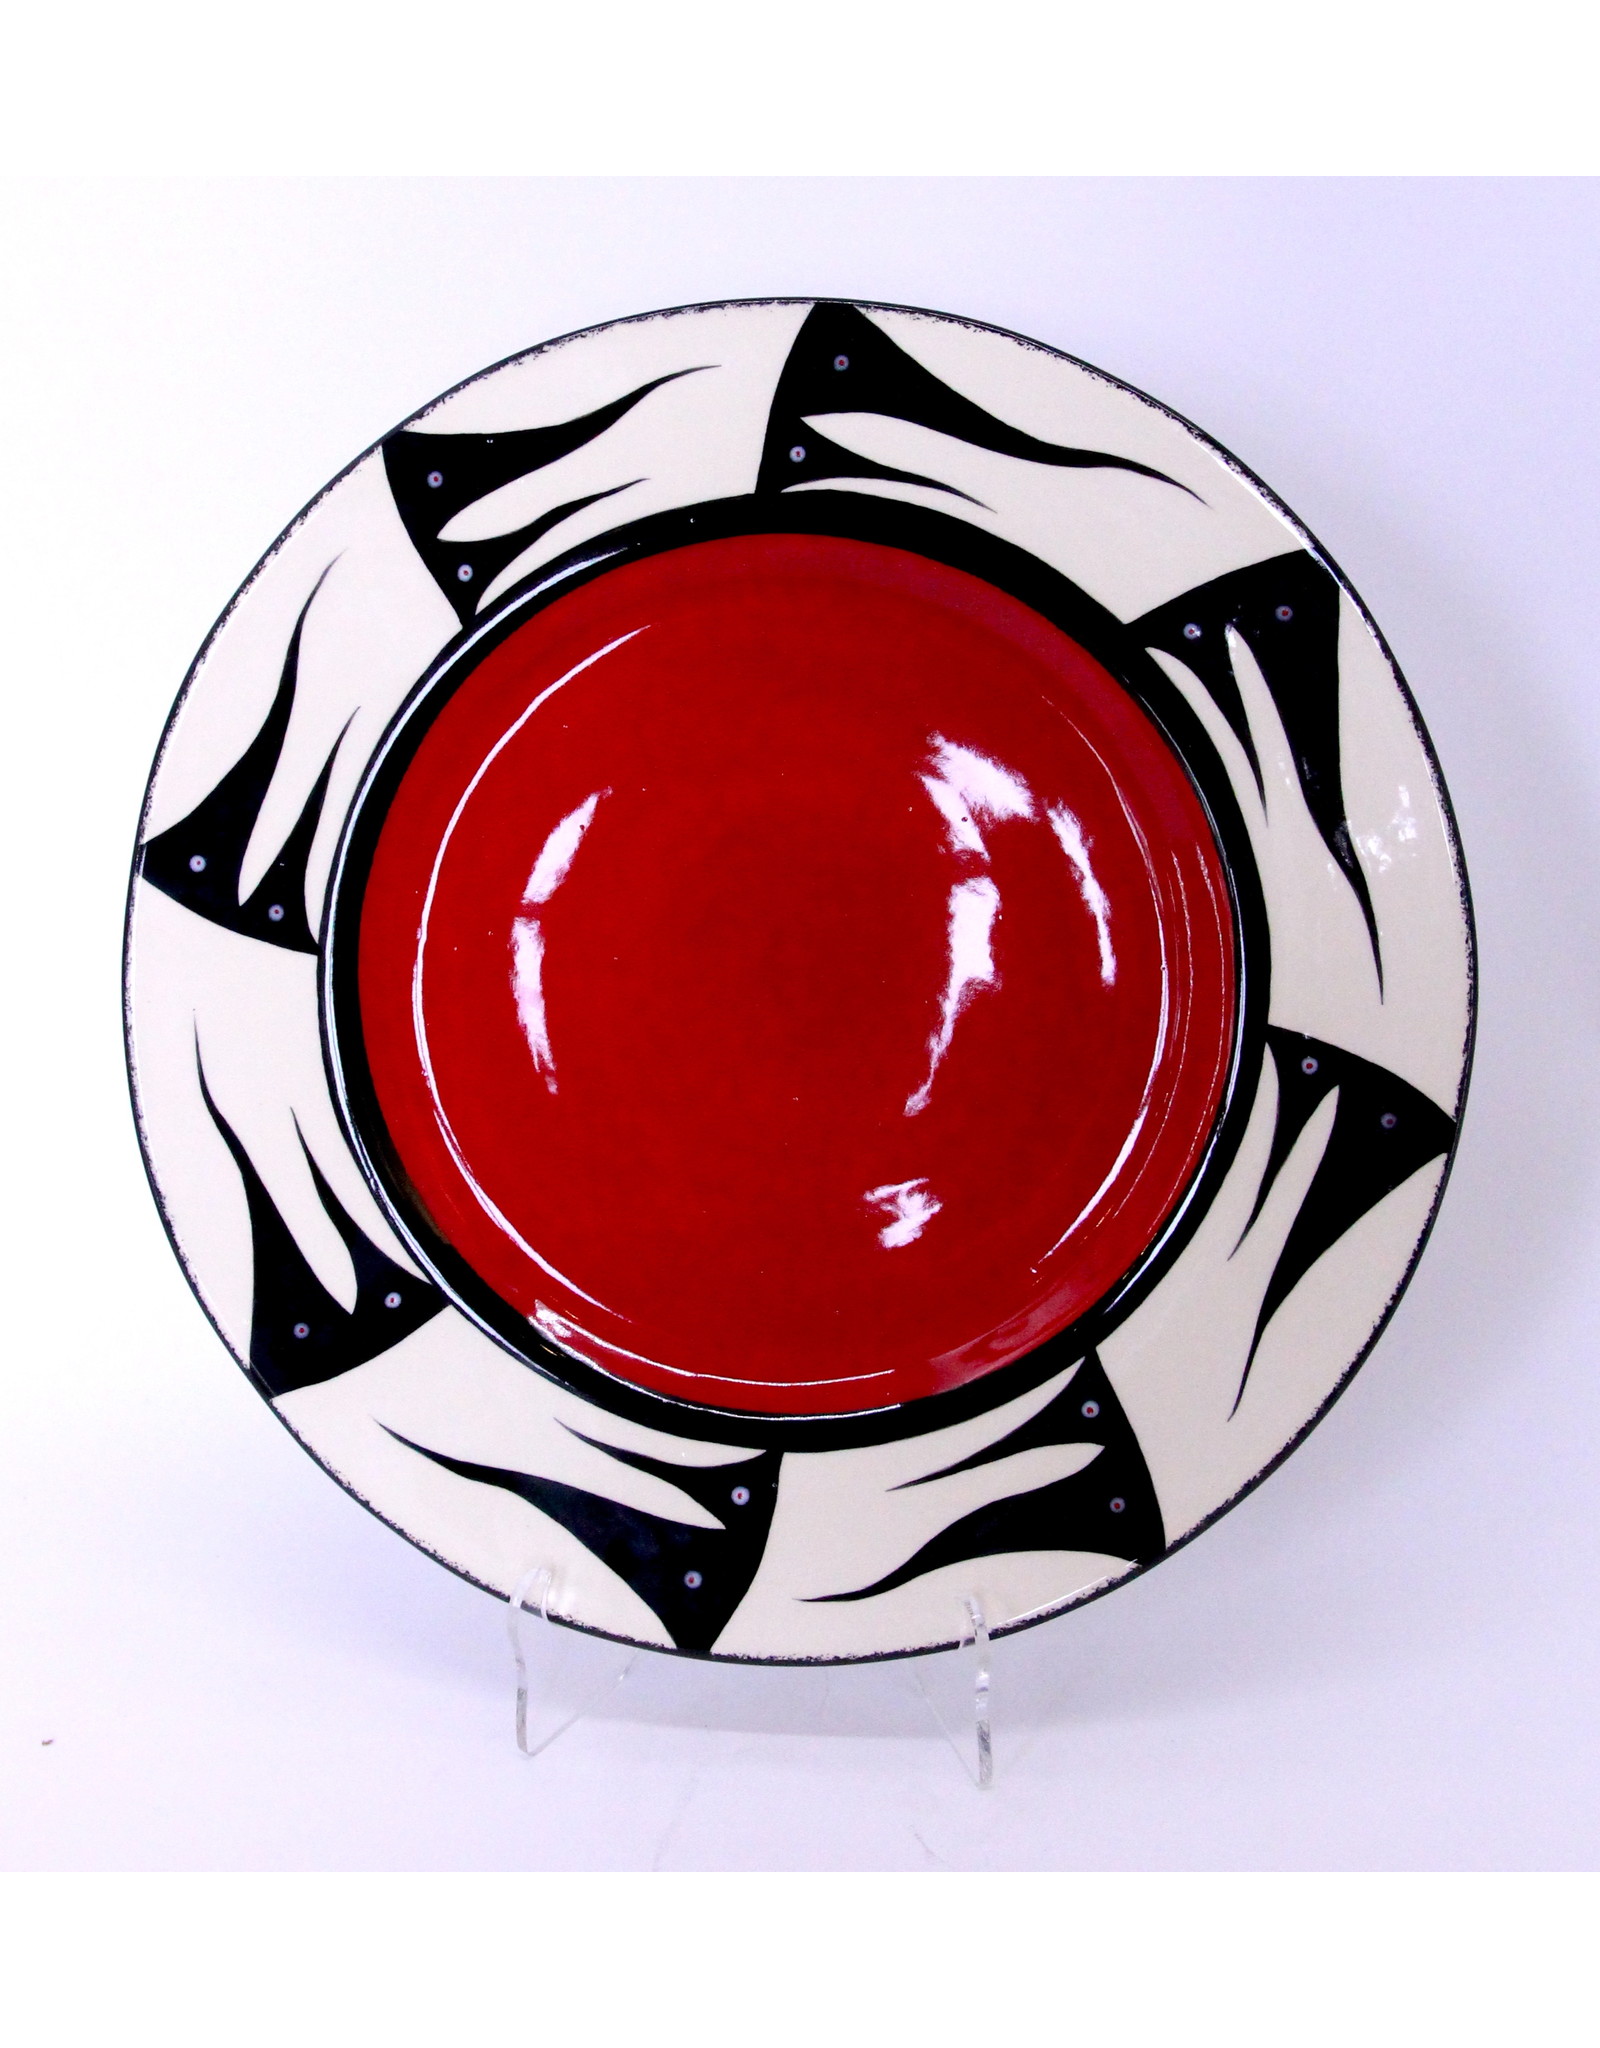 XL Round Platter by Veran Pardeahtan - Red